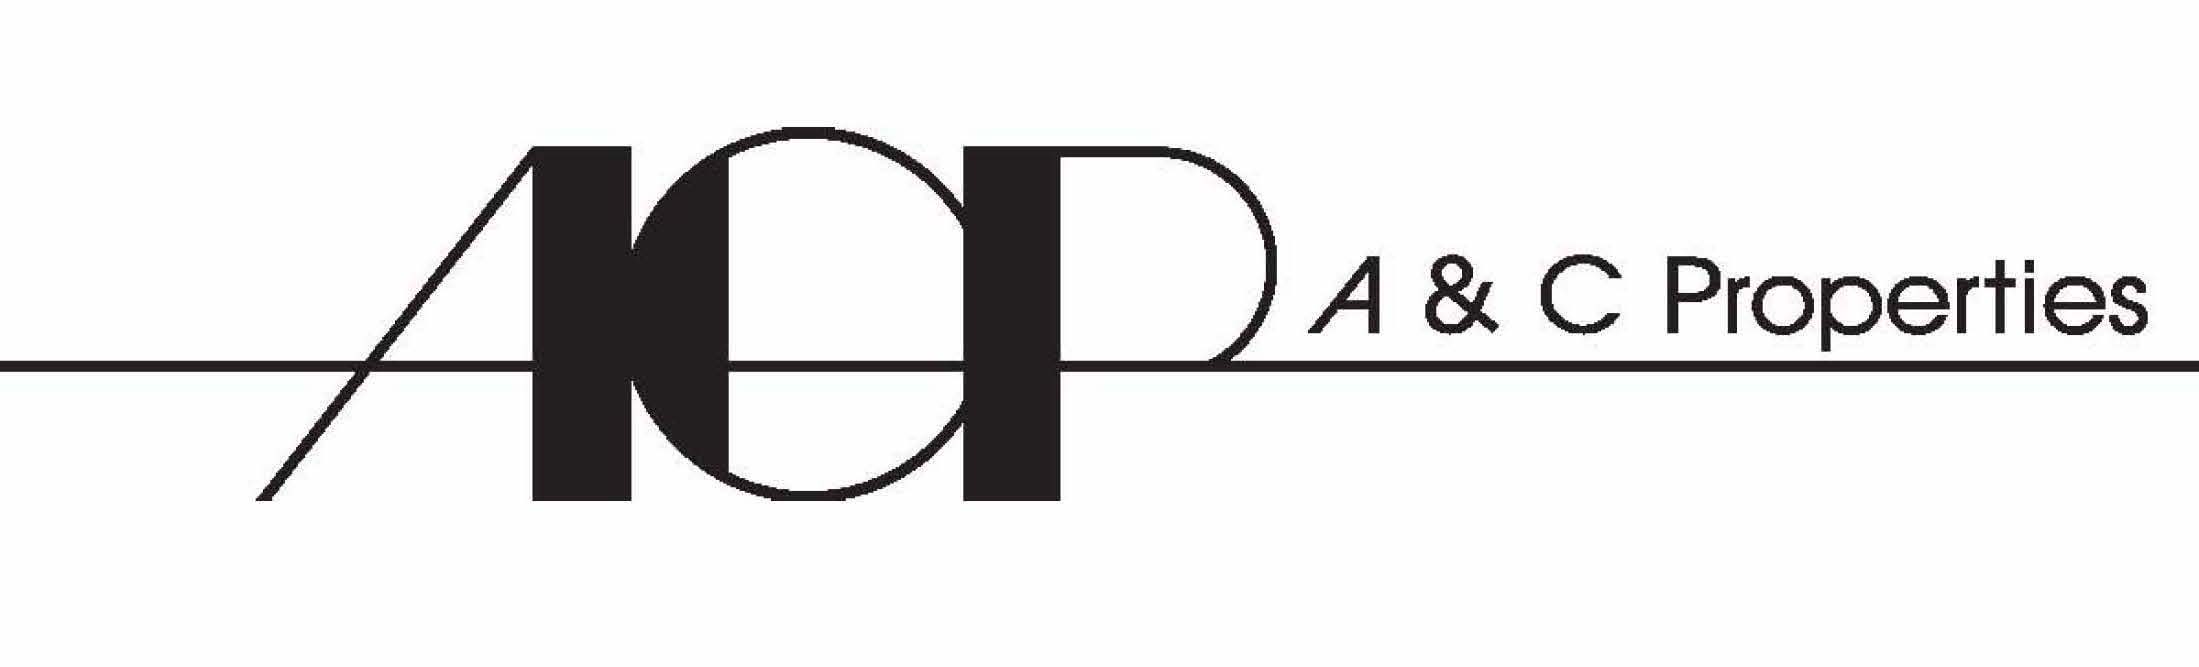 a&c properties logo-1